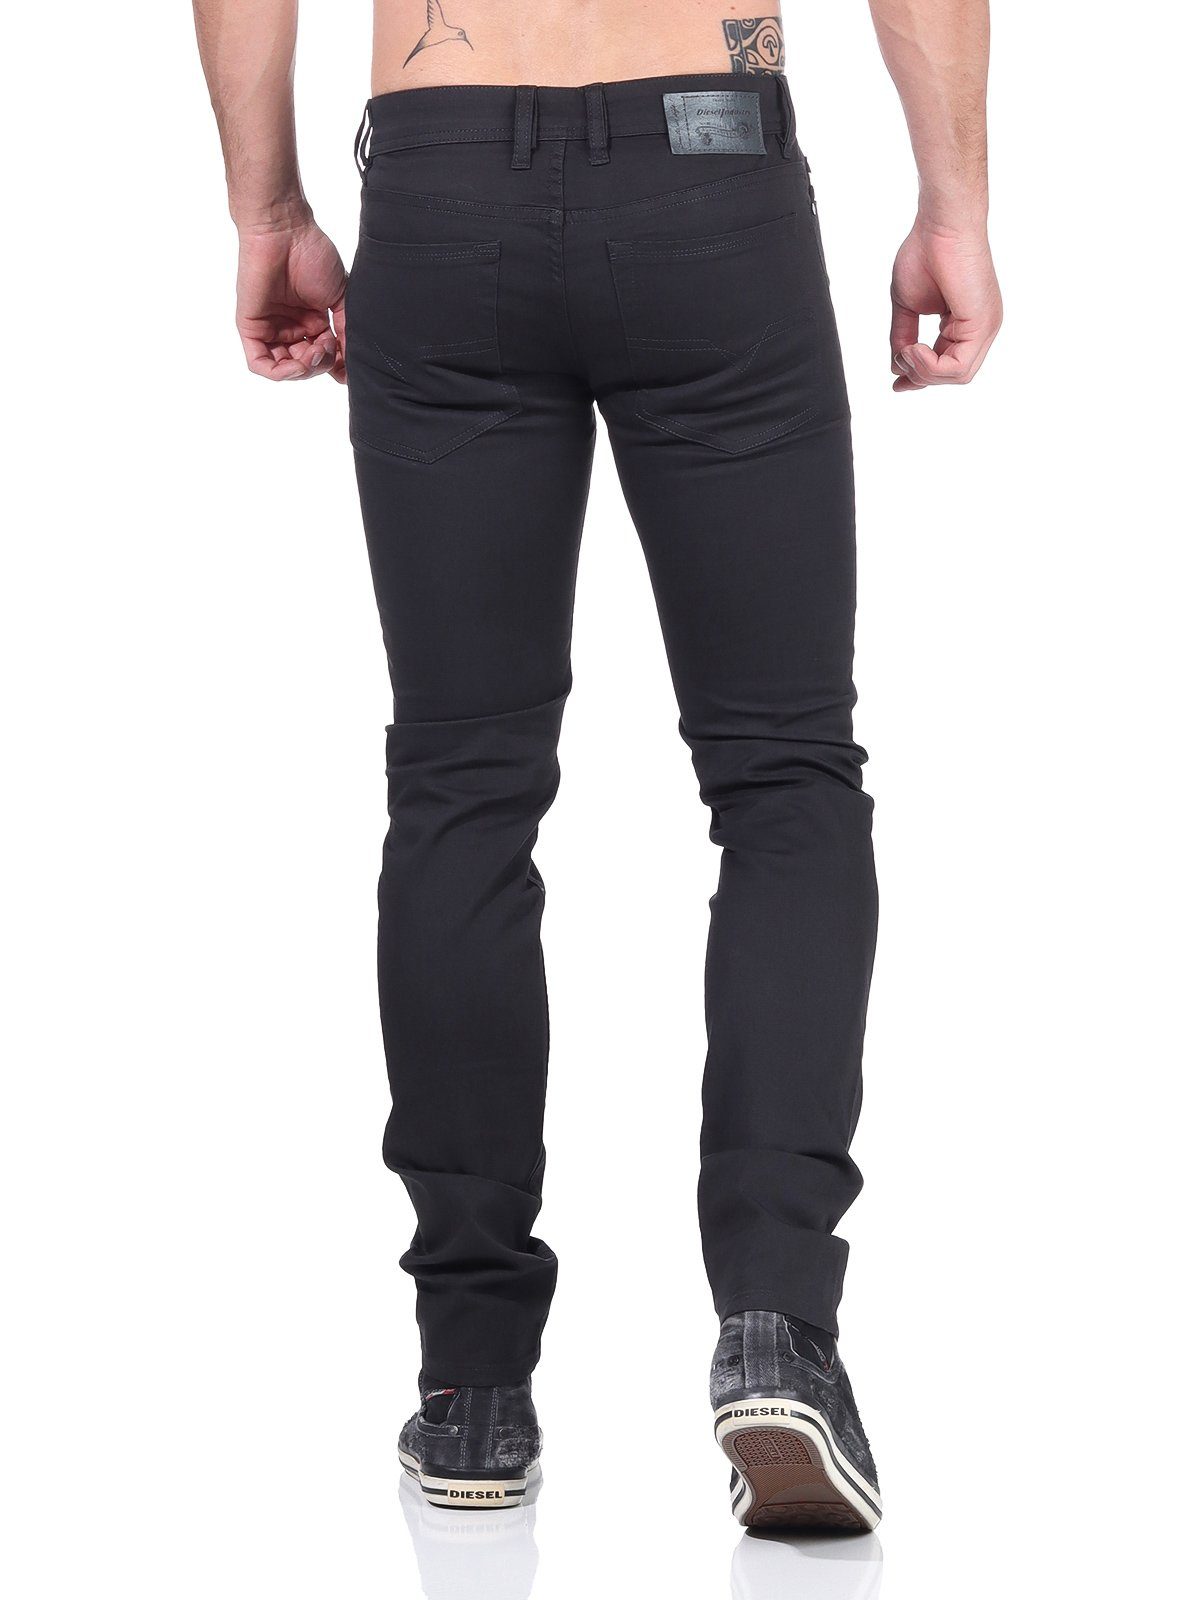 Diesel Skinny-fit-Jeans Einheitsgröße Grau Hose, inch R-TROXER-A 5-Pocket-Style, Skinny-fit-Jeans Länge: 32 Herren Sommer, Dunkel Diesel